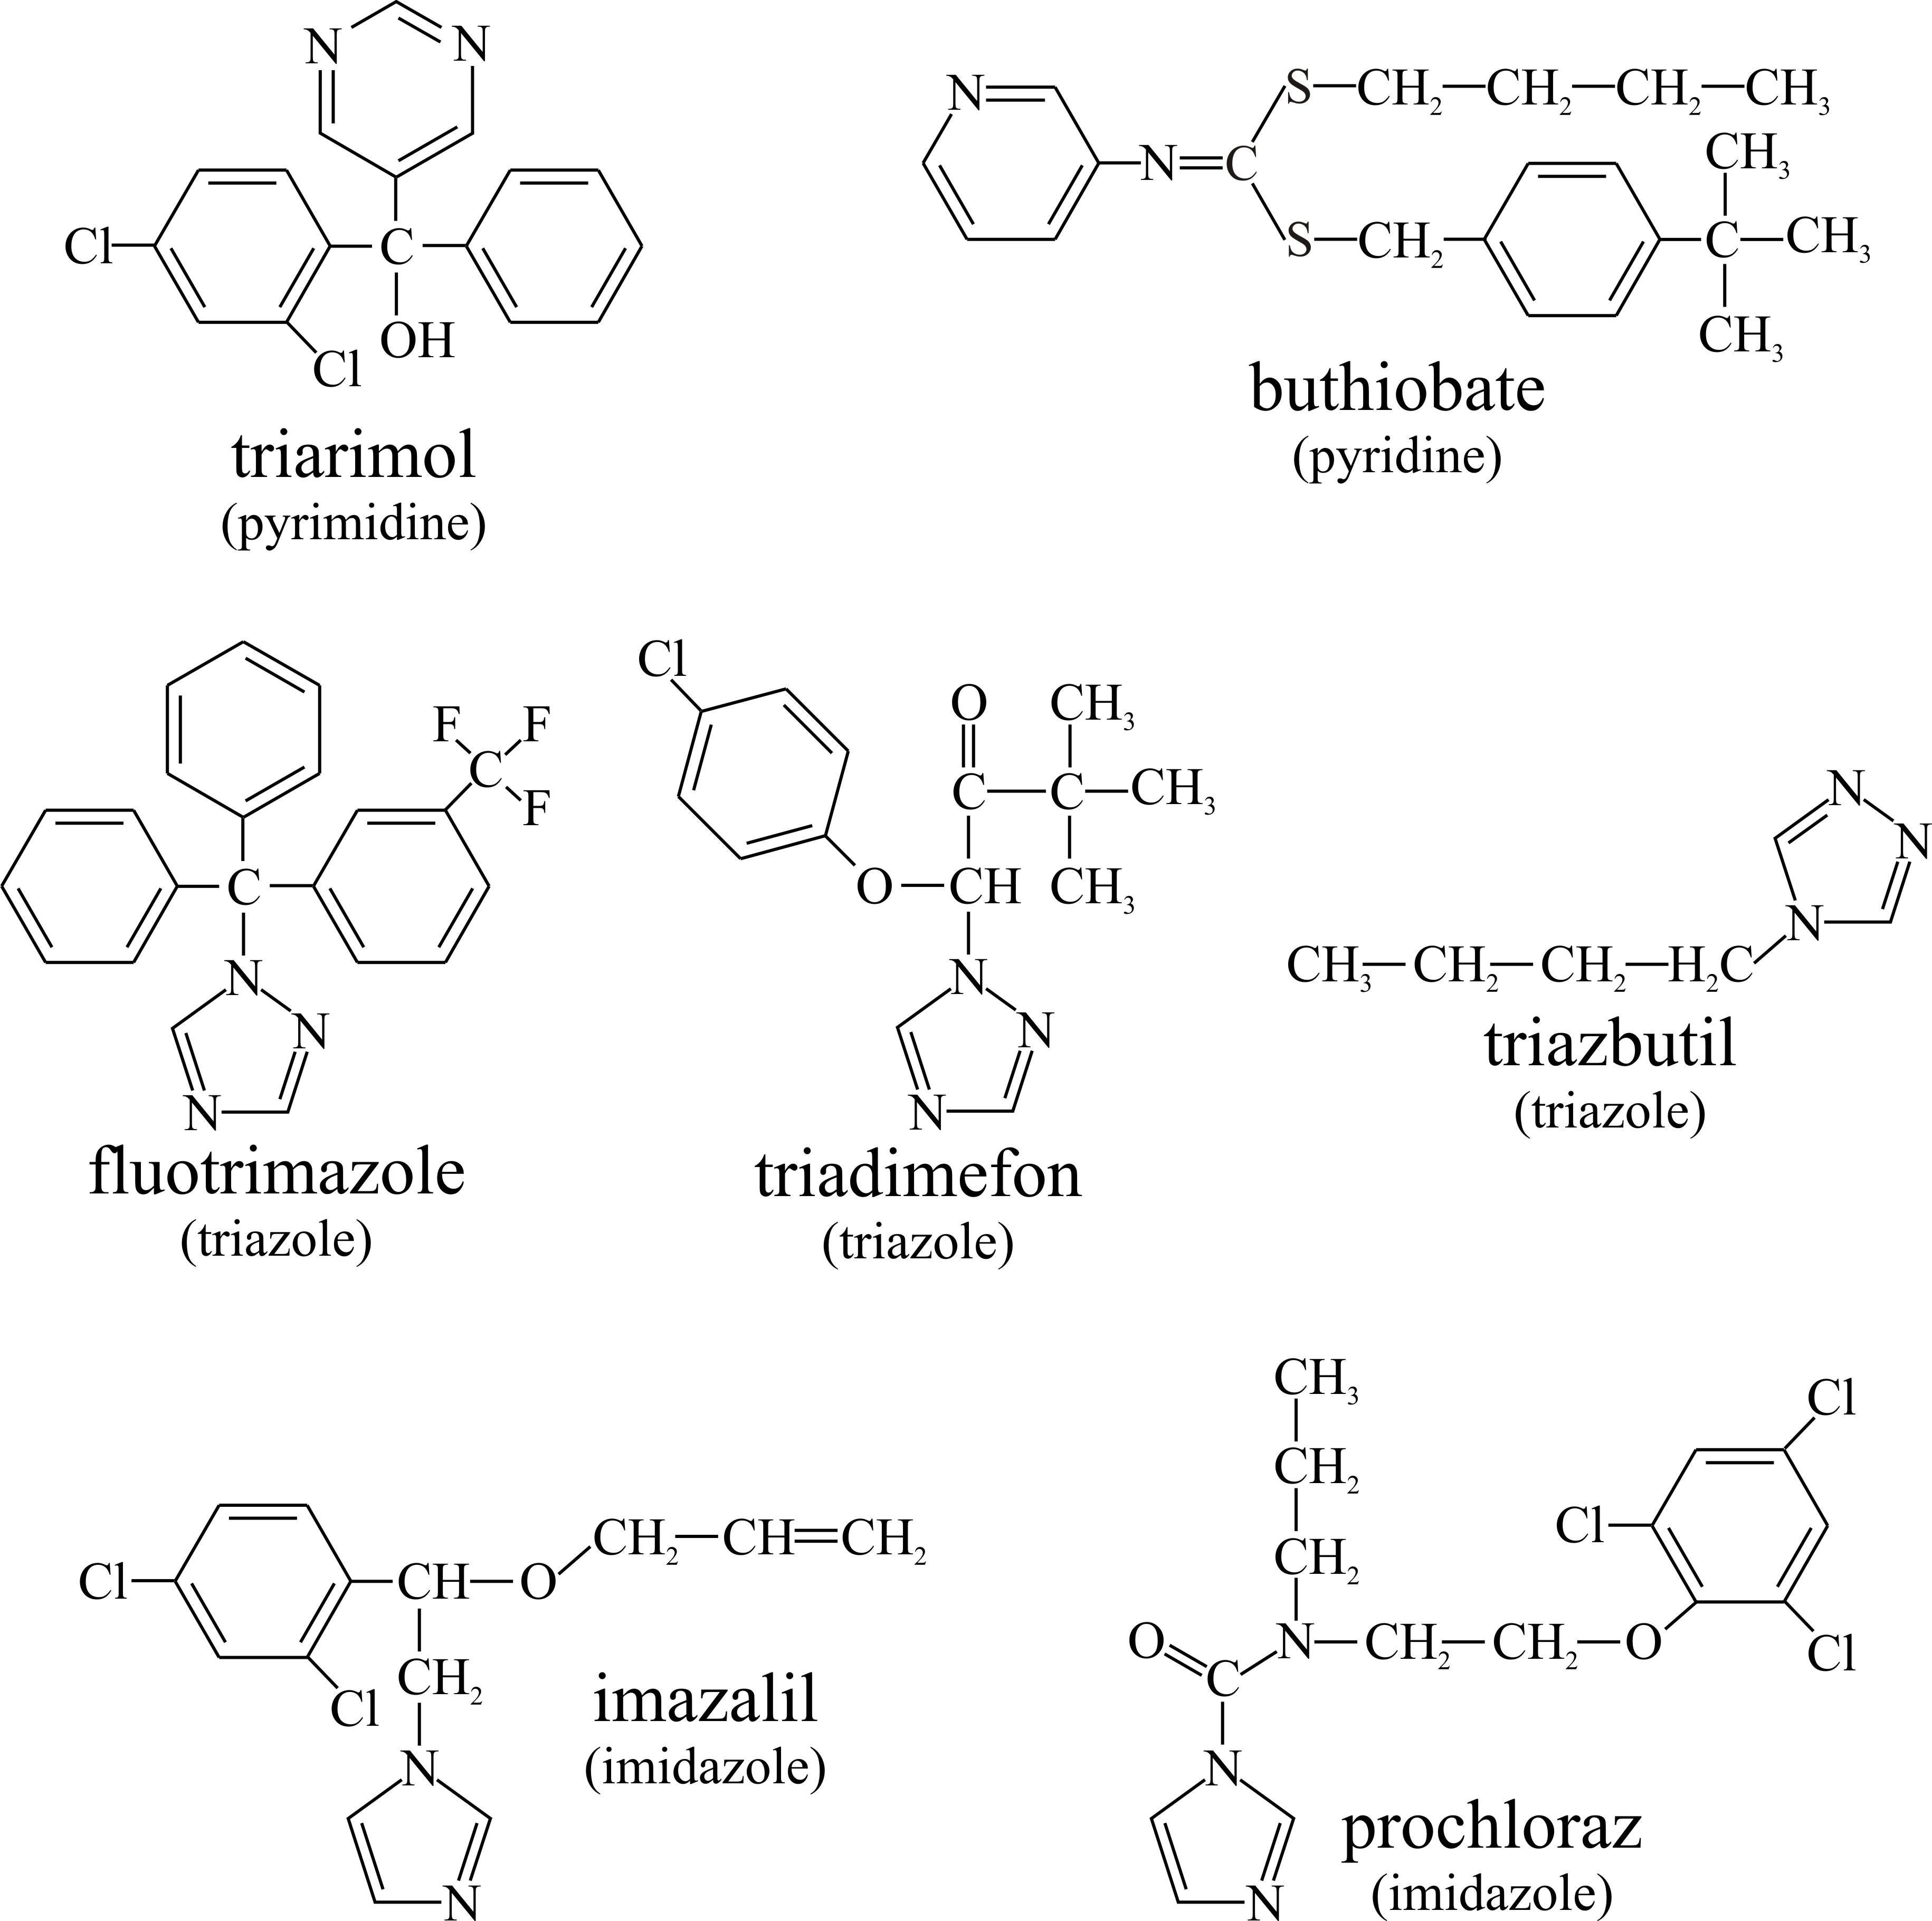 Some fungicides that inhibit ergosterol biosynthesis